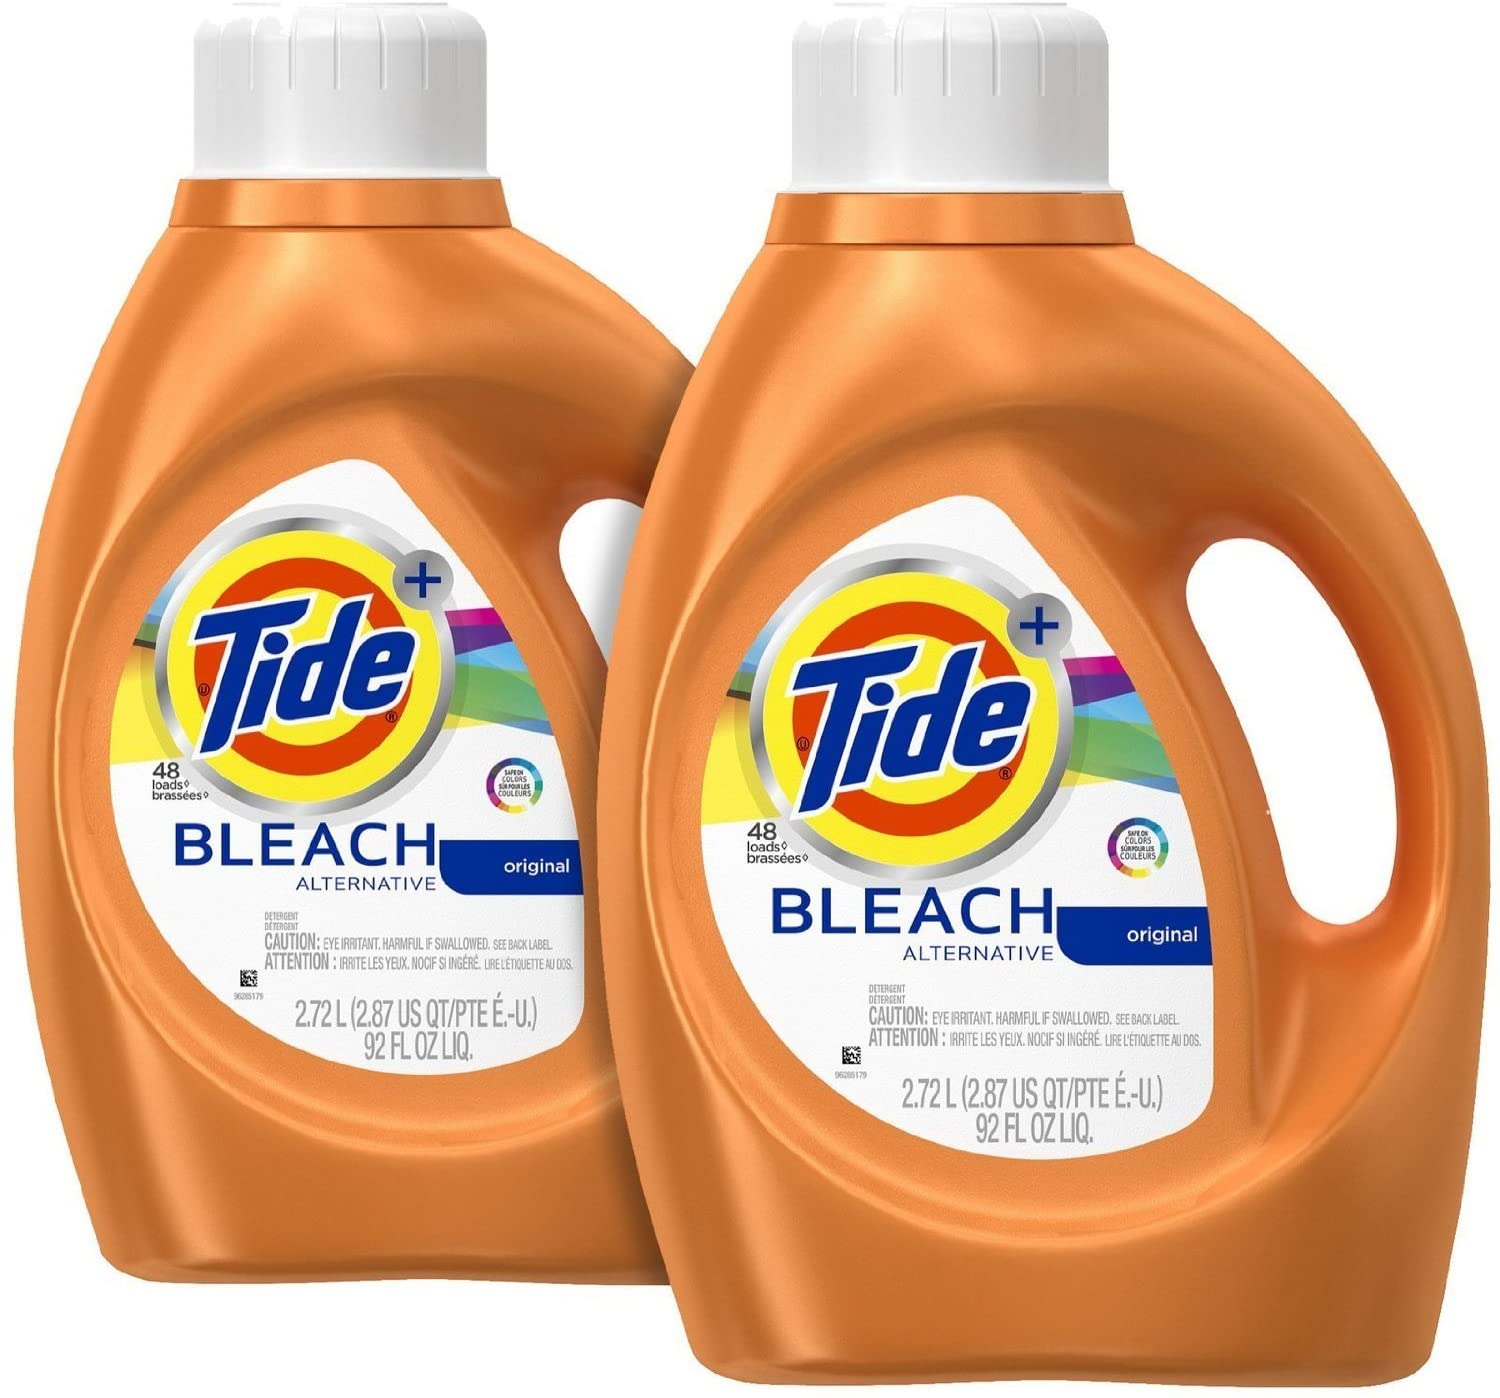 Tide Plus Bleach Alternative Laundry Detergent